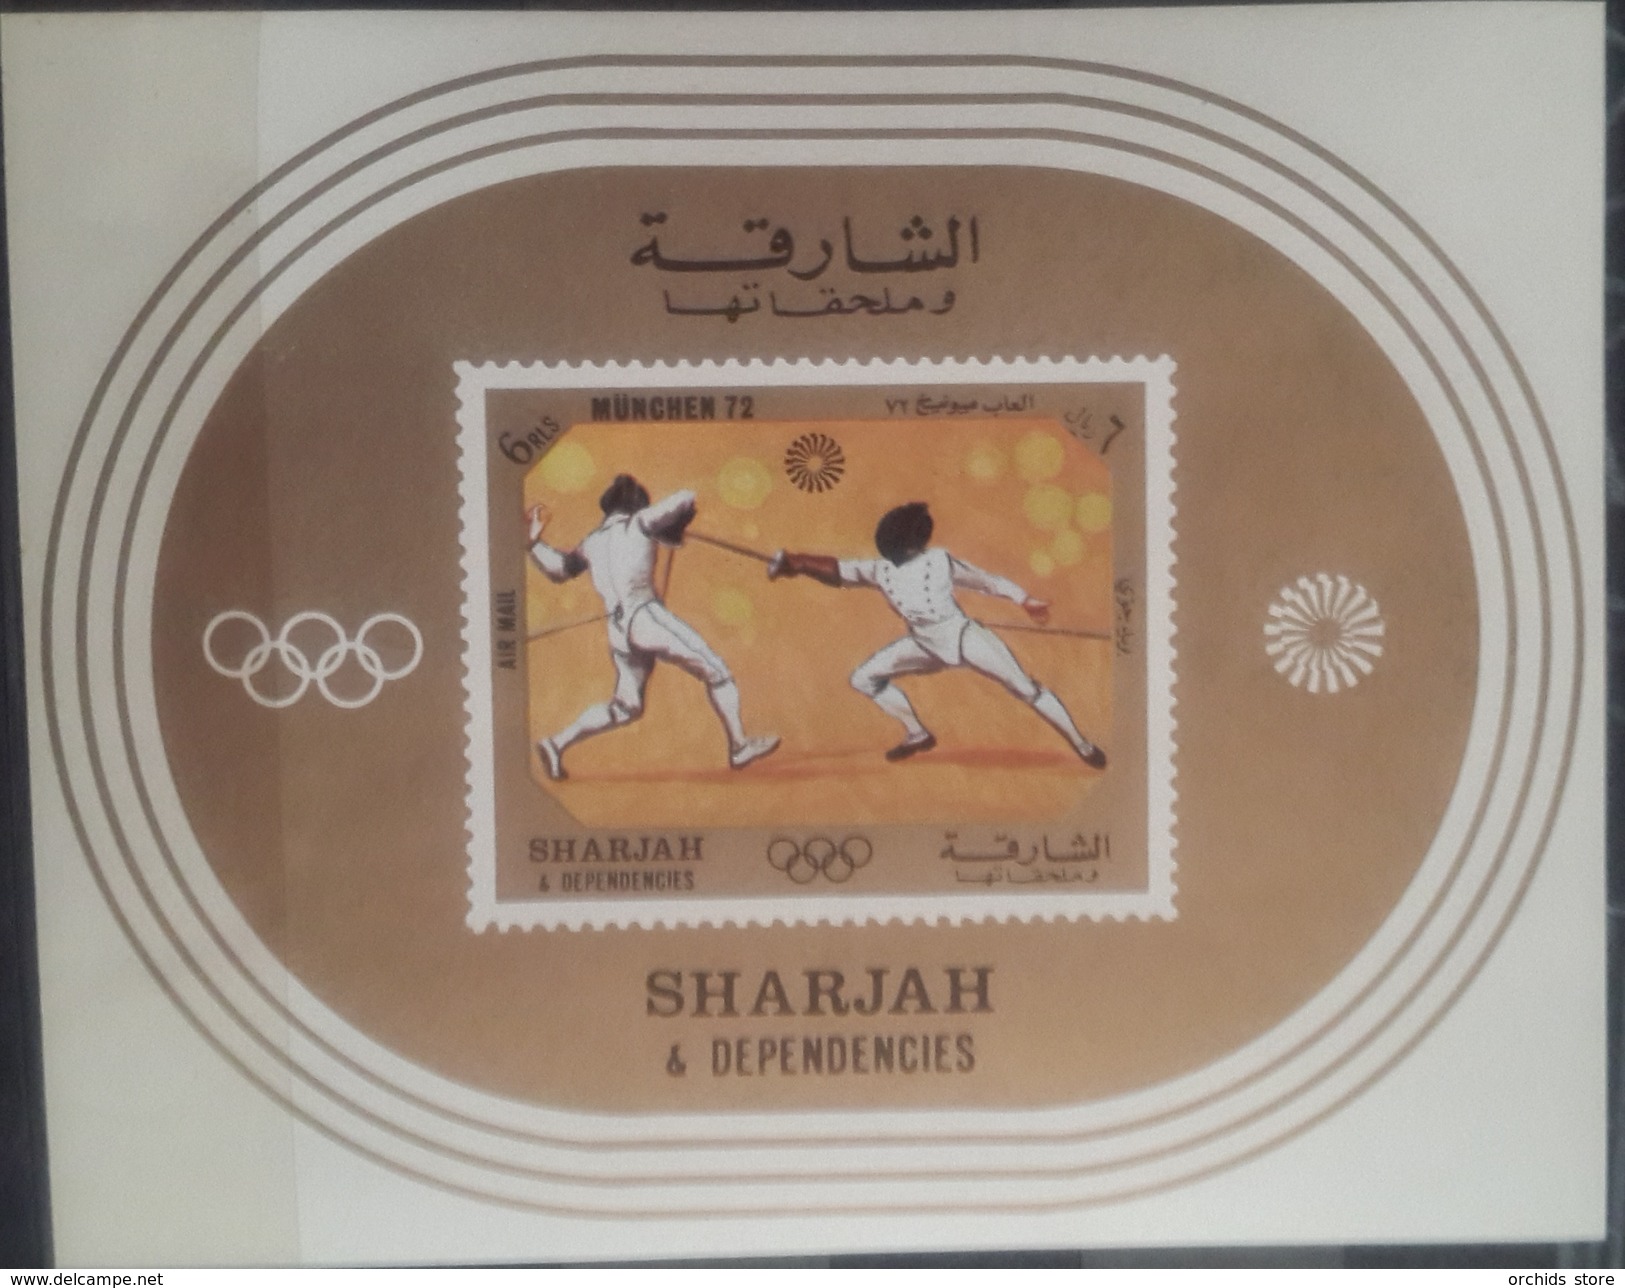 V25 - Sharjah 1972 Mi. Block 108 S/S - Munich Olympic Games - Fencing Sports - MNH - Sharjah